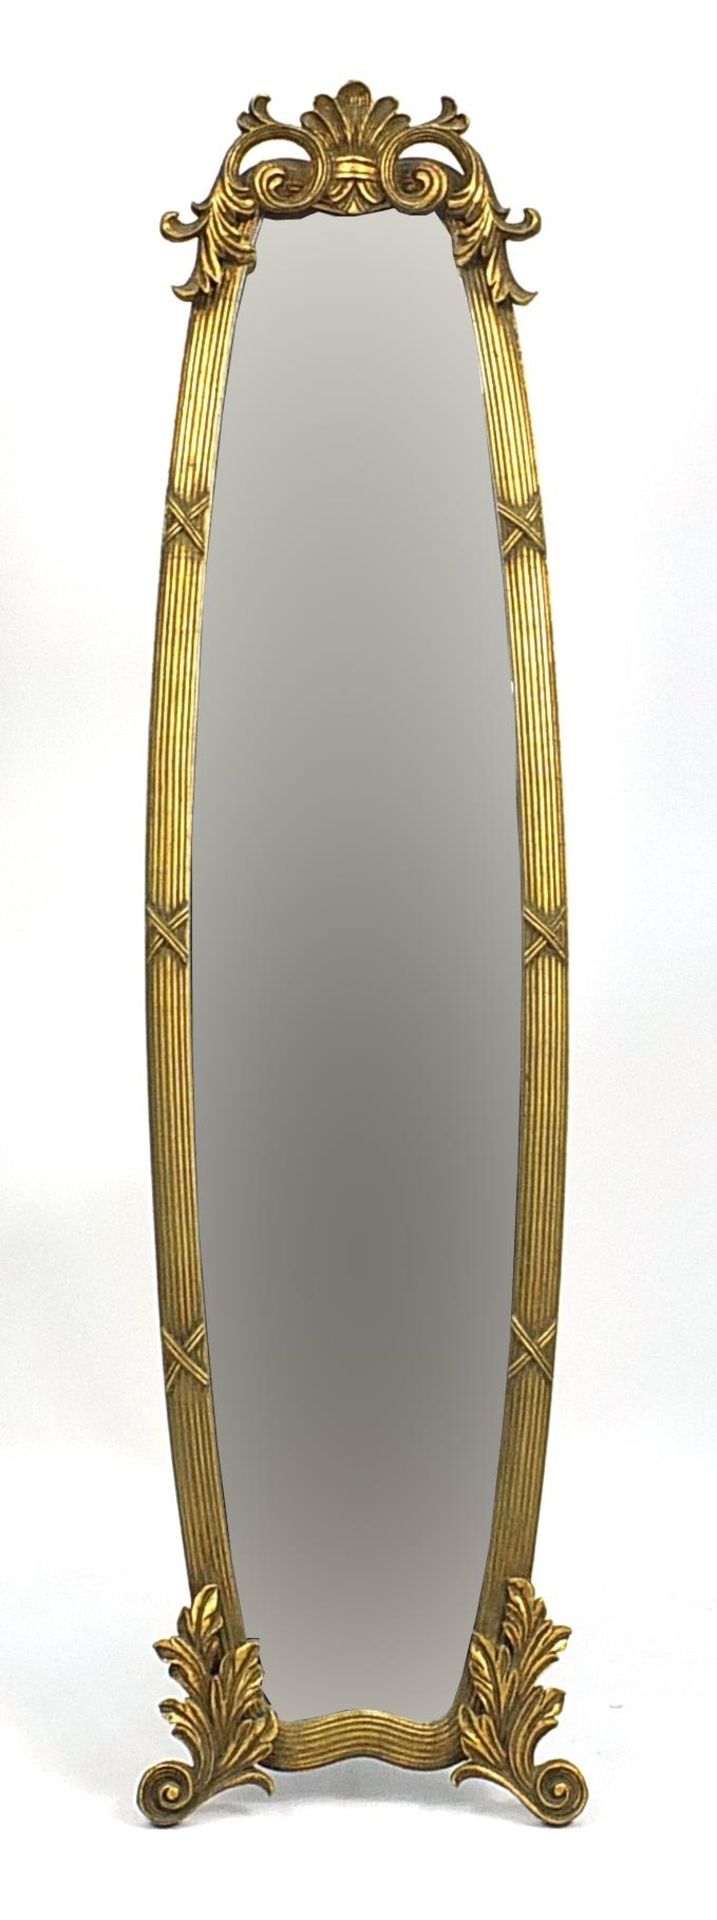 Gilt framed cheval mirror, 145cm high x 34.5cm wide